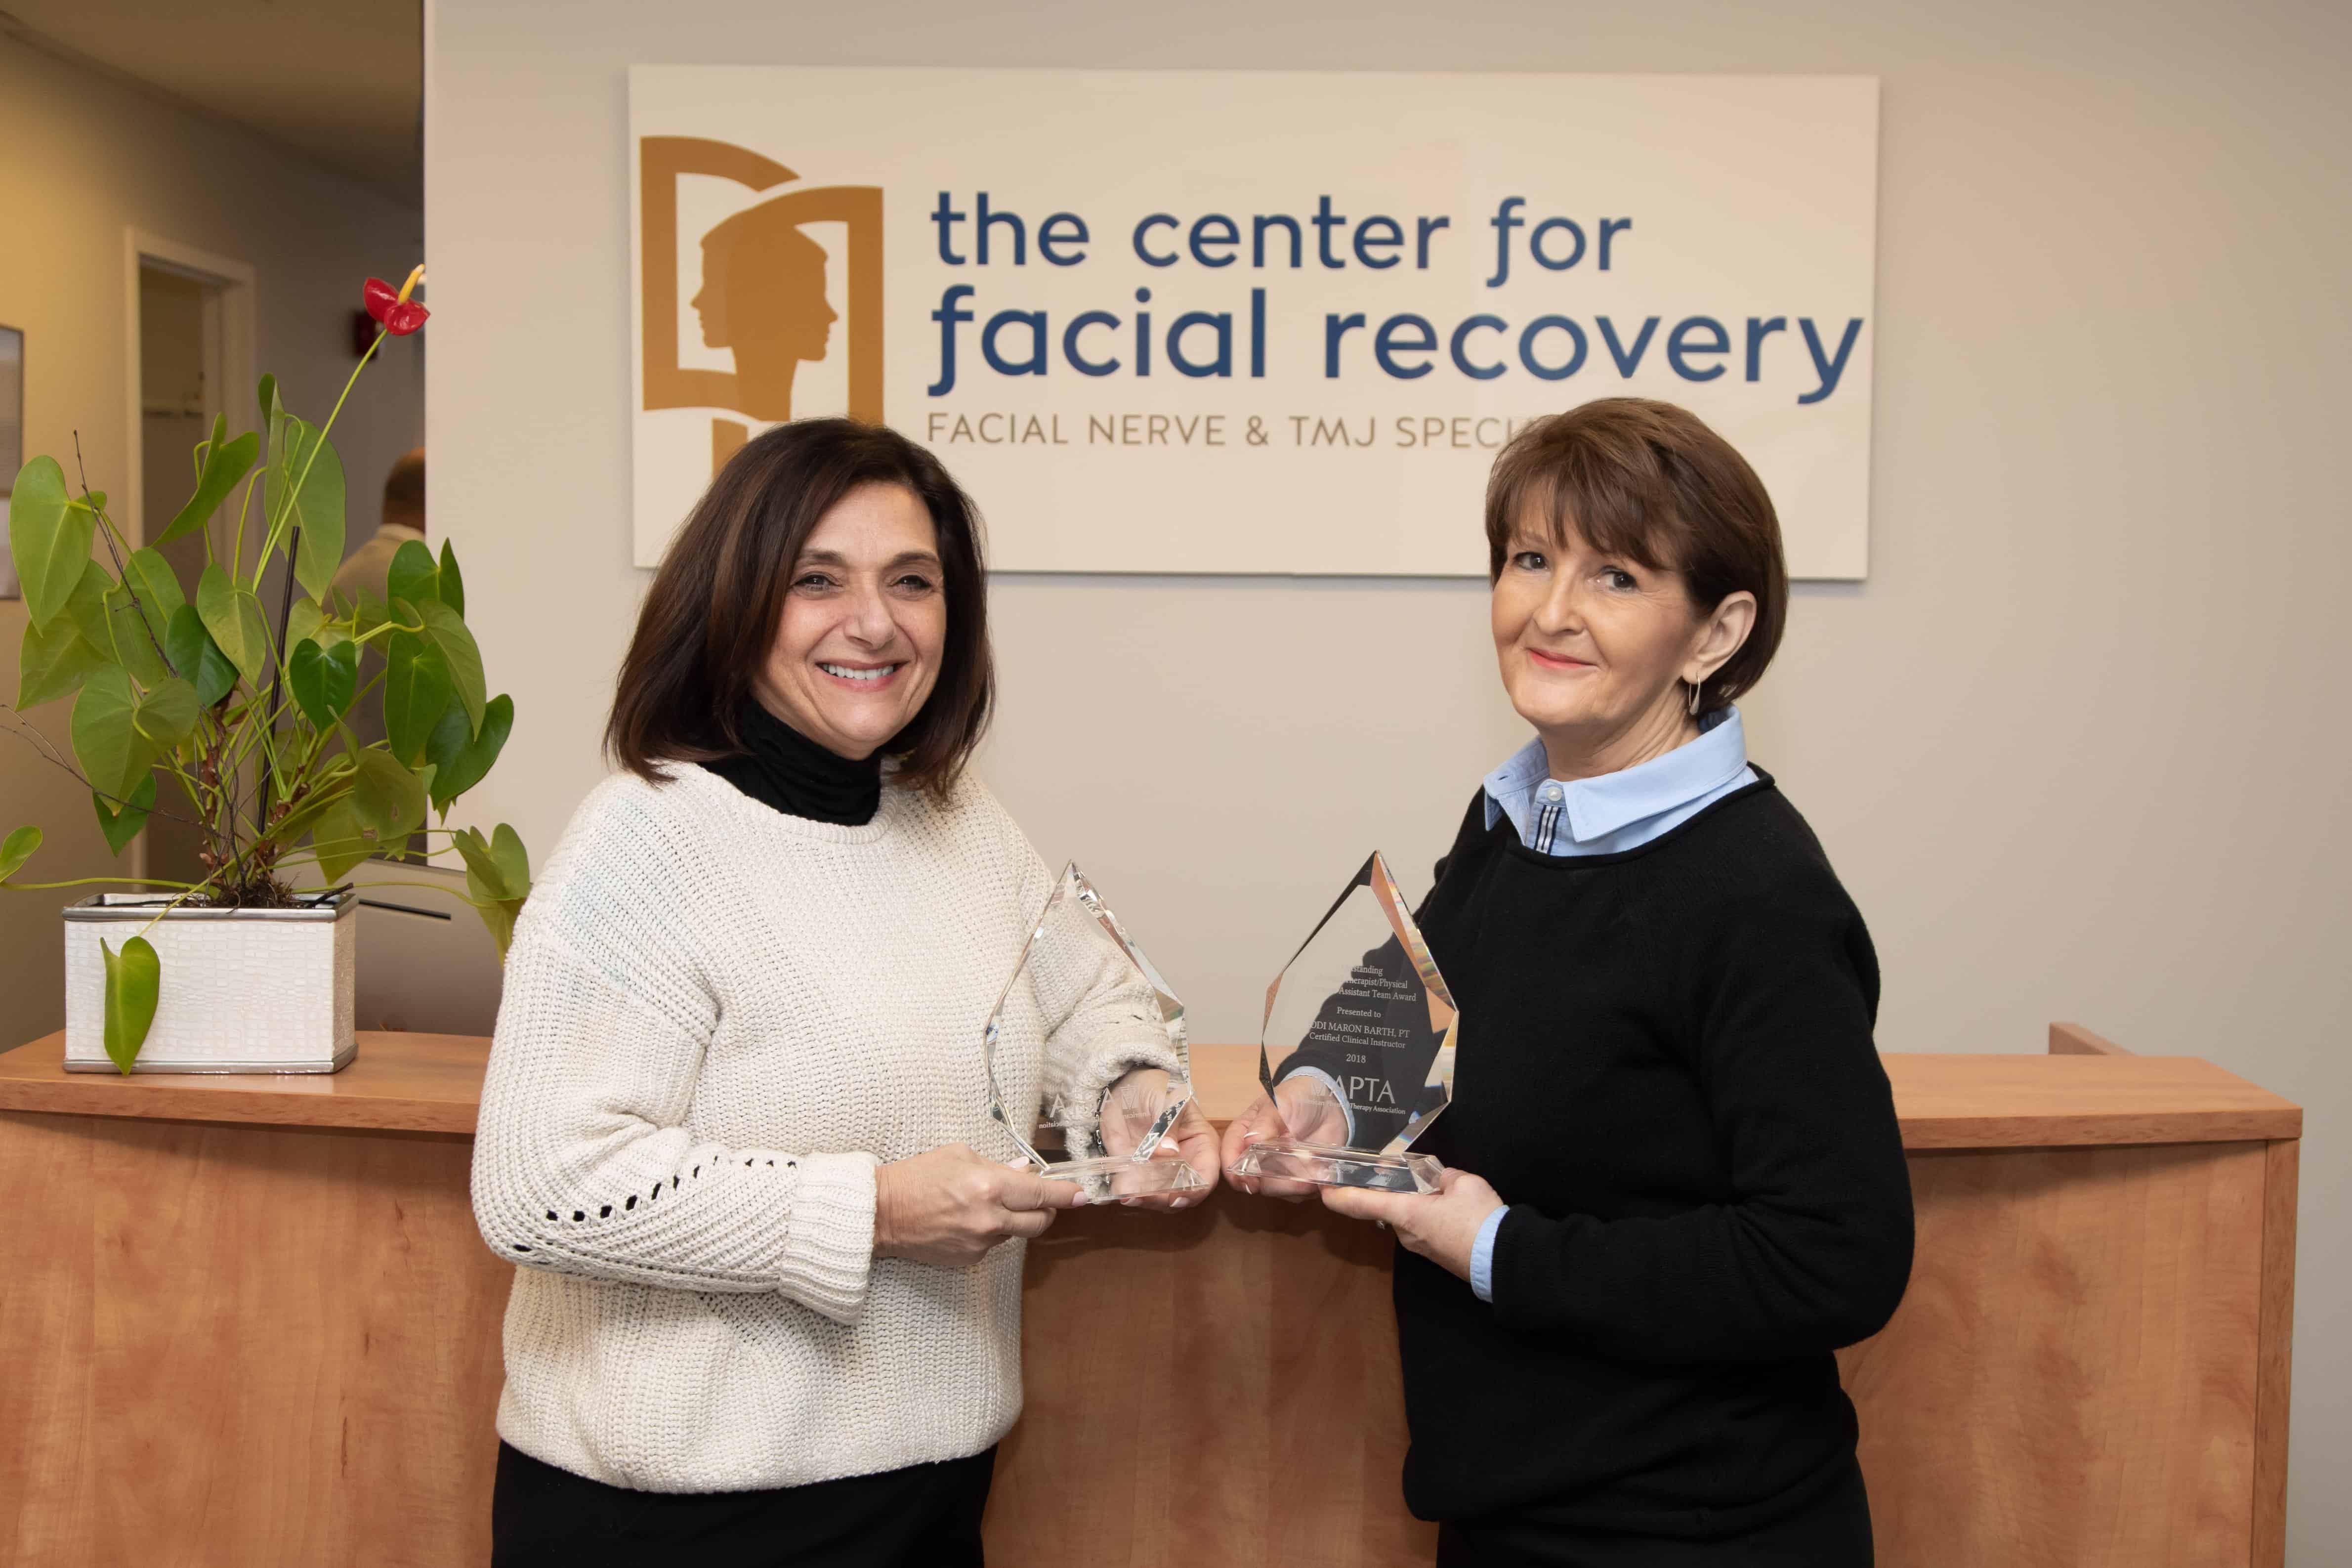 The Center for Facial Recovery Team